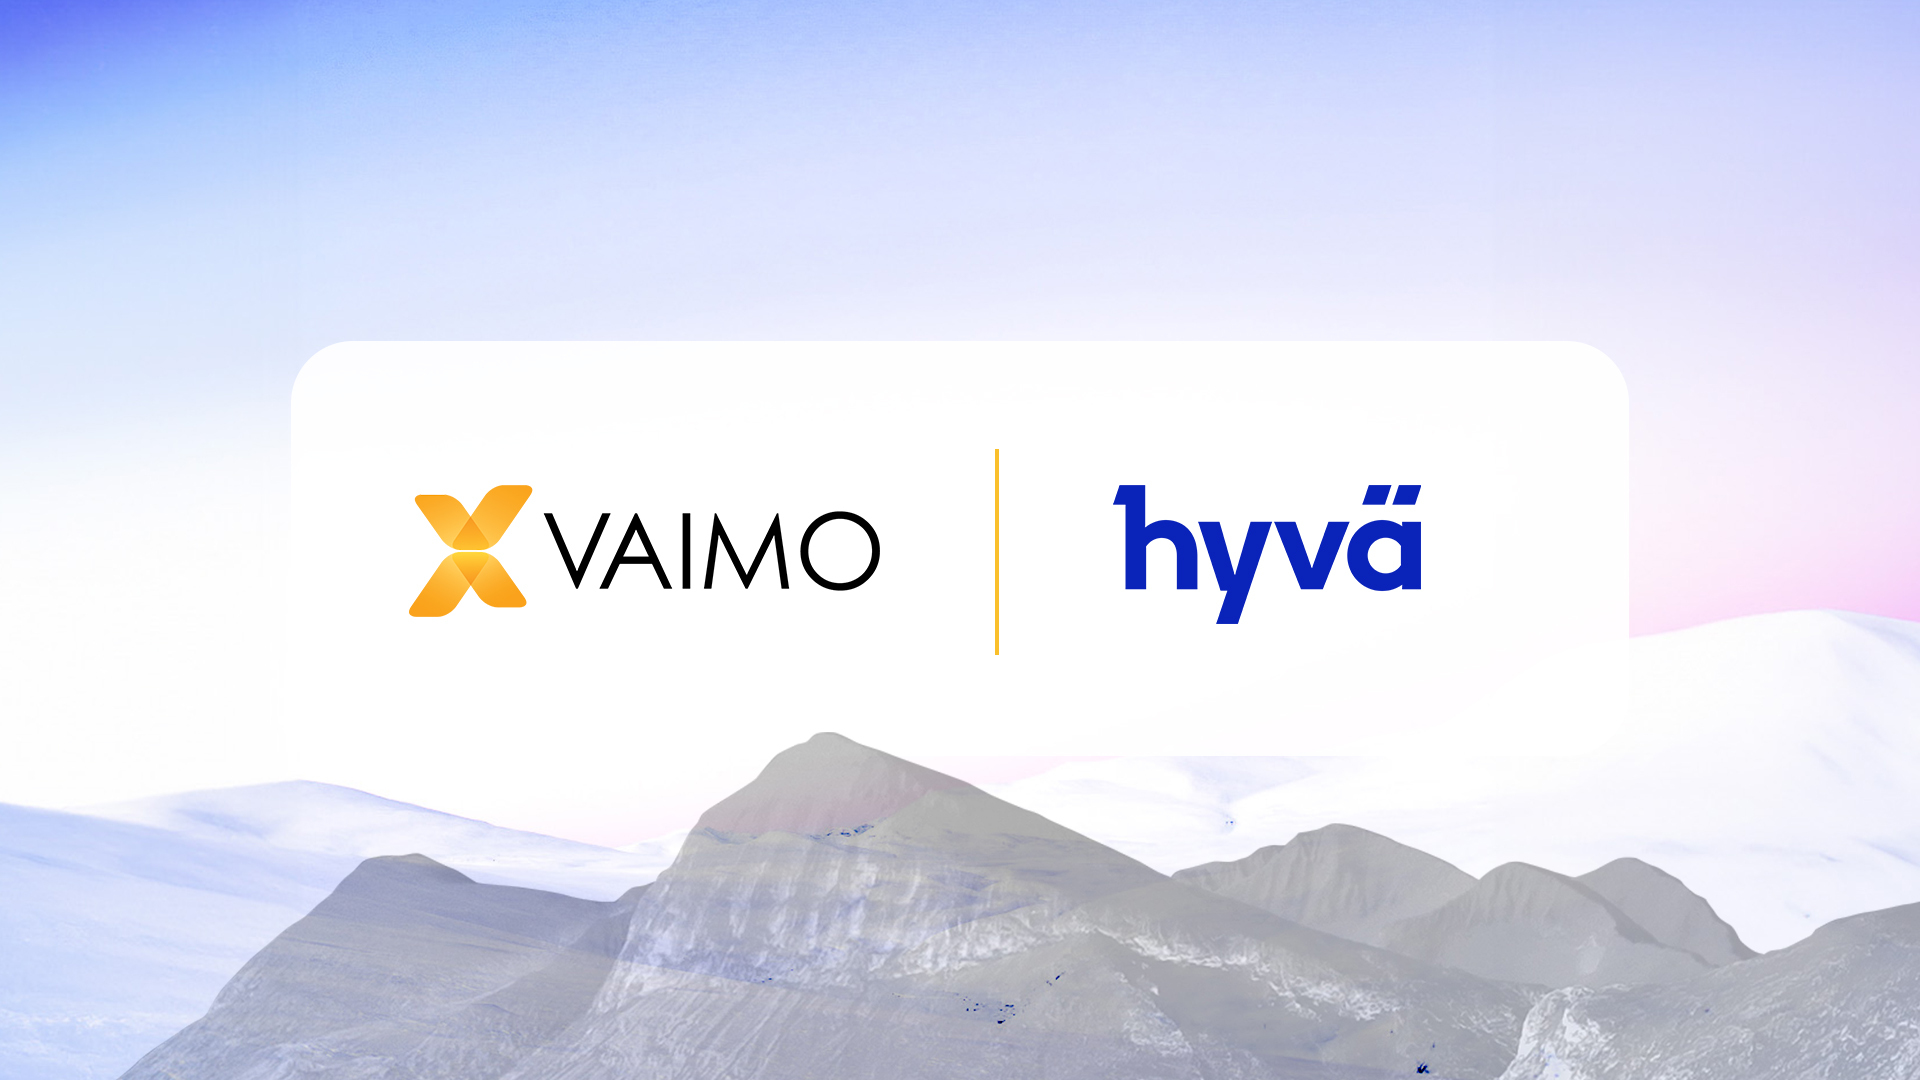 Vaimo Hyva header image containing both logos